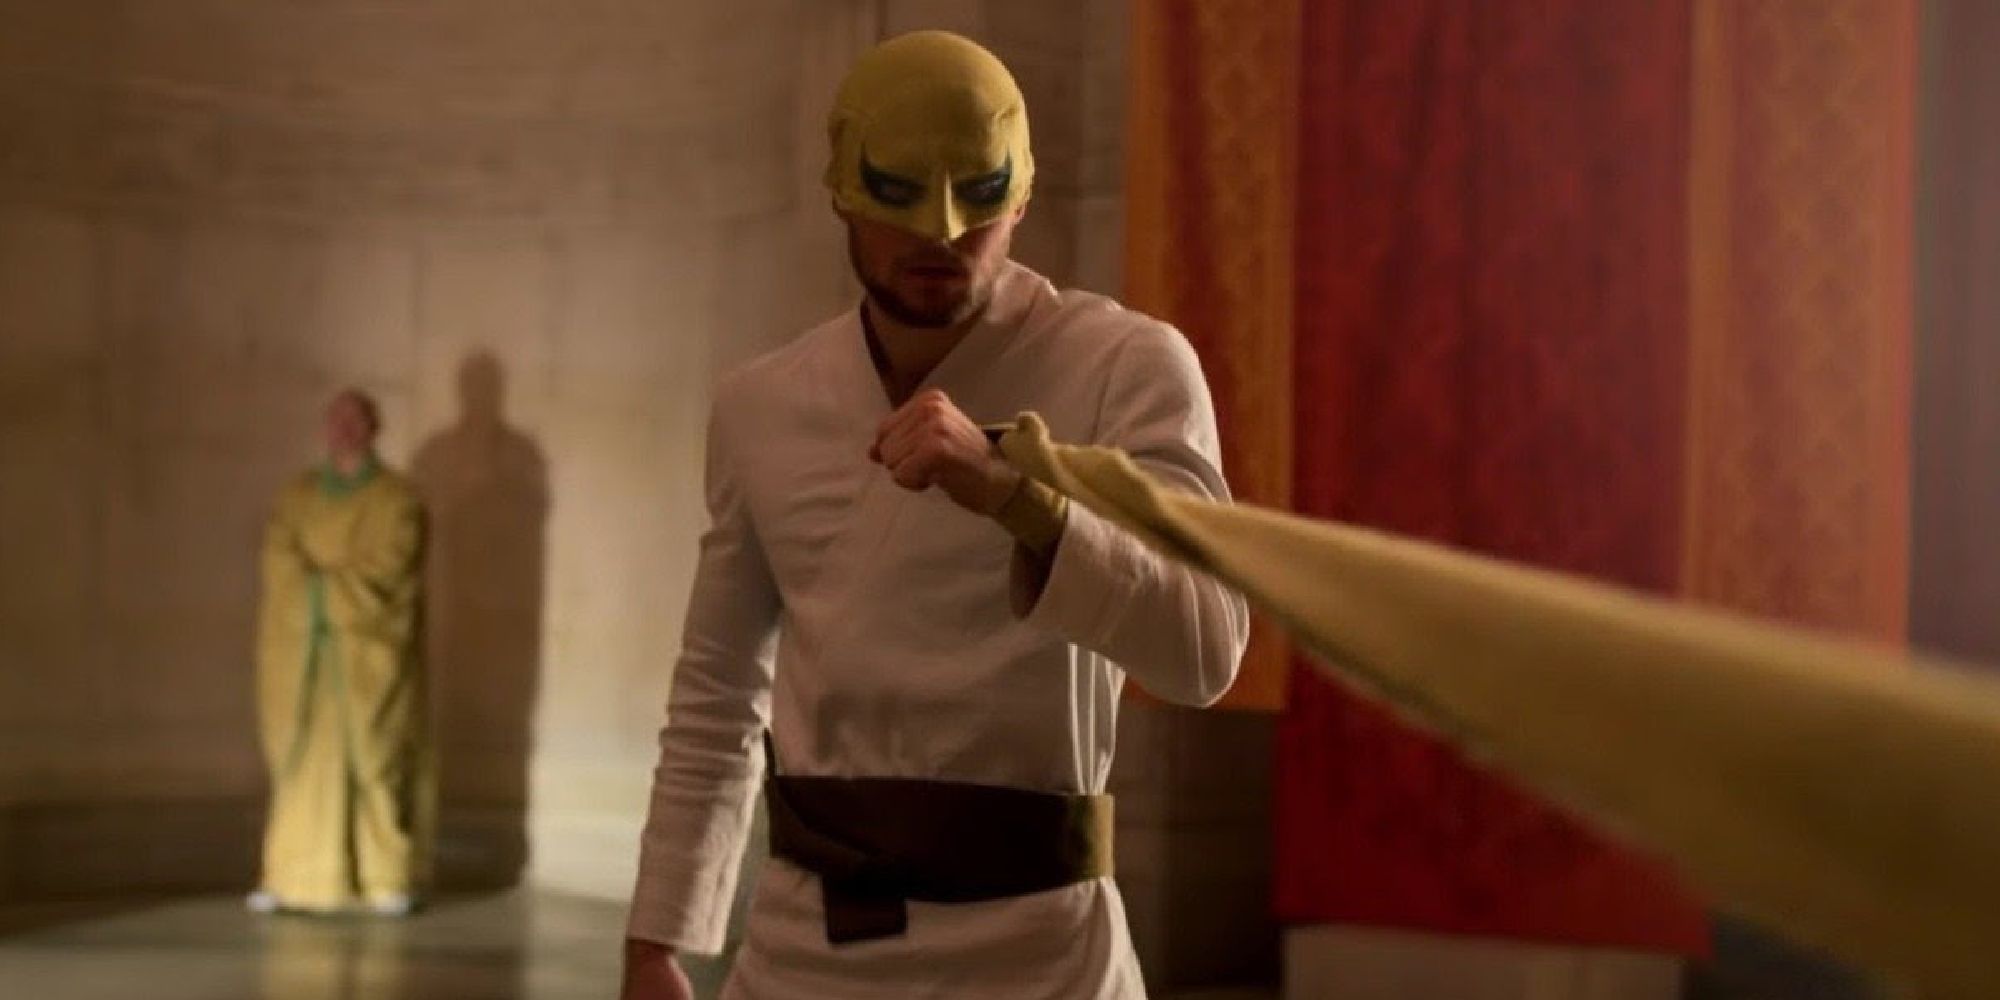 Danny Rand wearing the classic Iron Fist headband in season 2 of Iron Fist